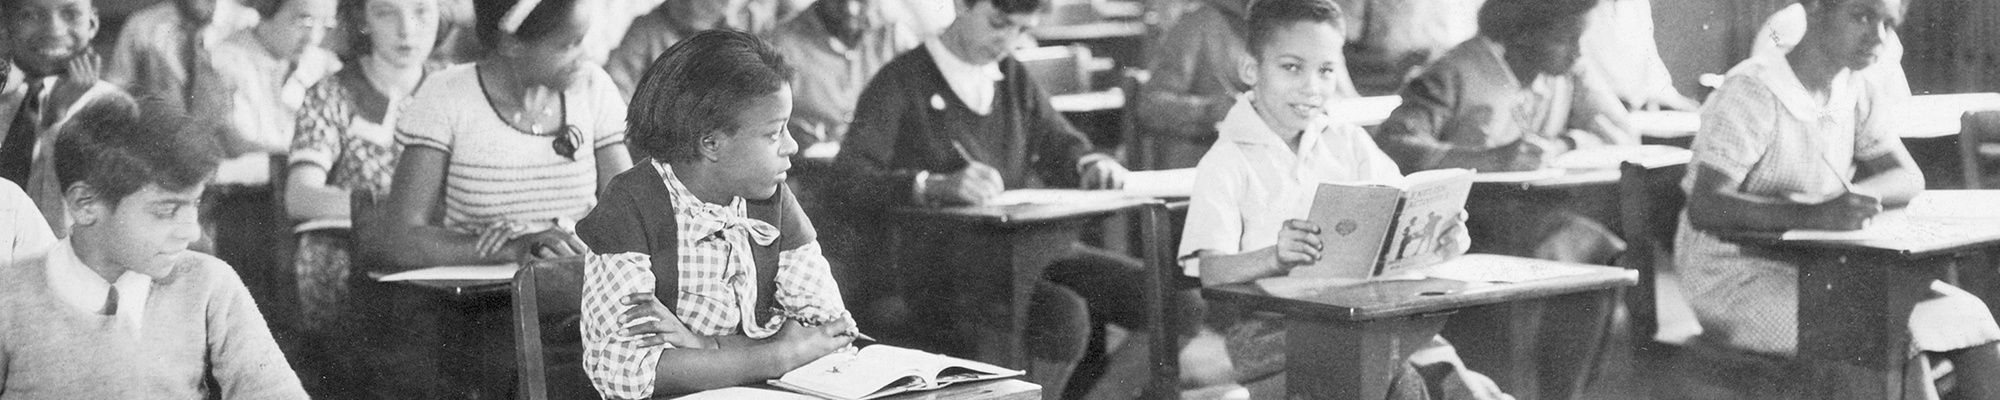 Students sitting at their desks doing work. Circa 1940-1950.